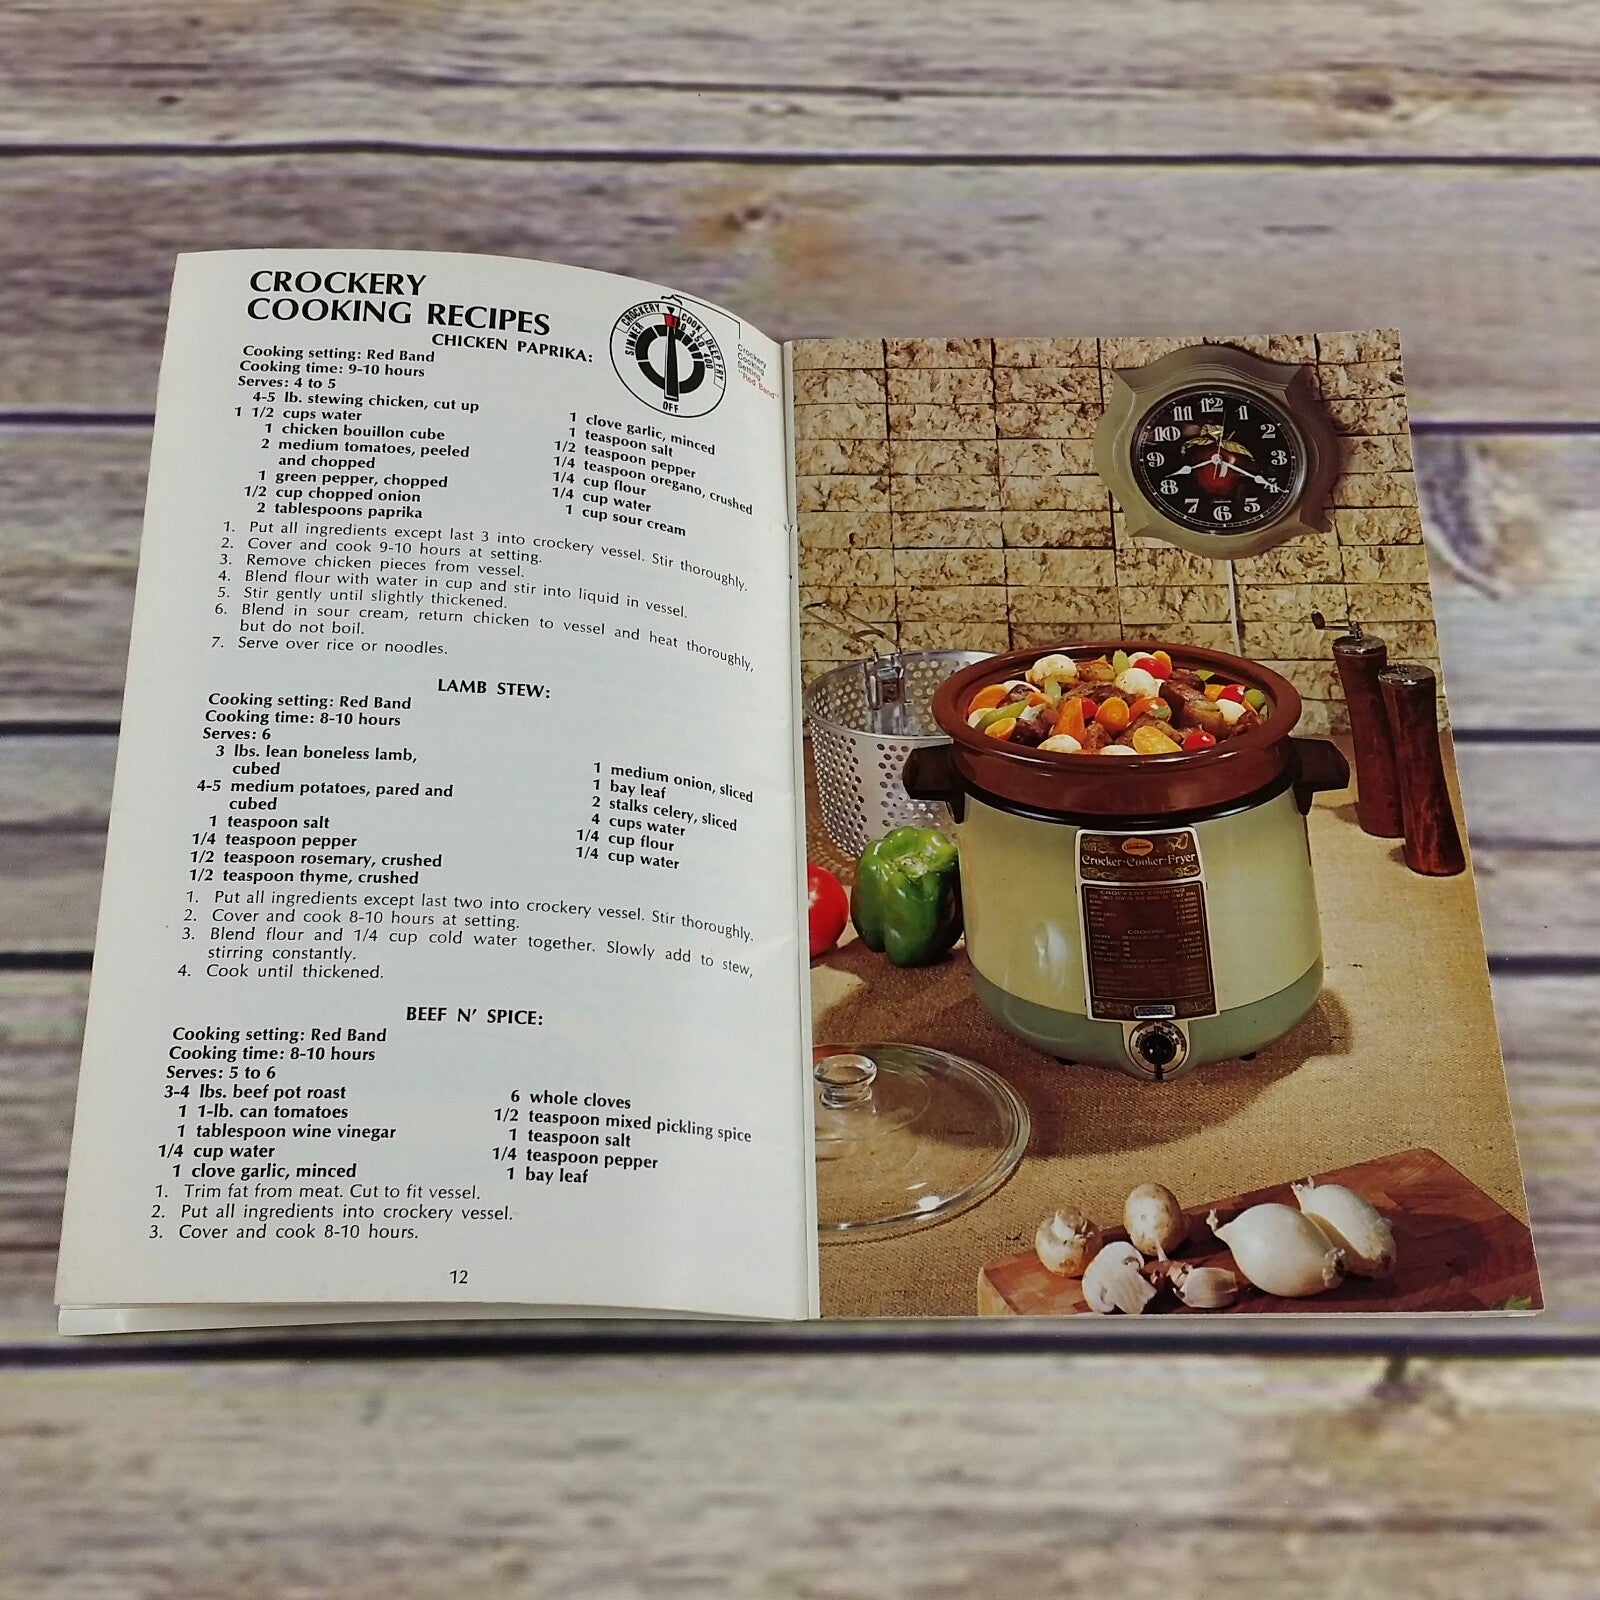 Sunbeam Crocker Cooker Fryer Vintage Cookbook Recipes and Instructions Manual 1976 Paperback Booklet - At Grandma's Table